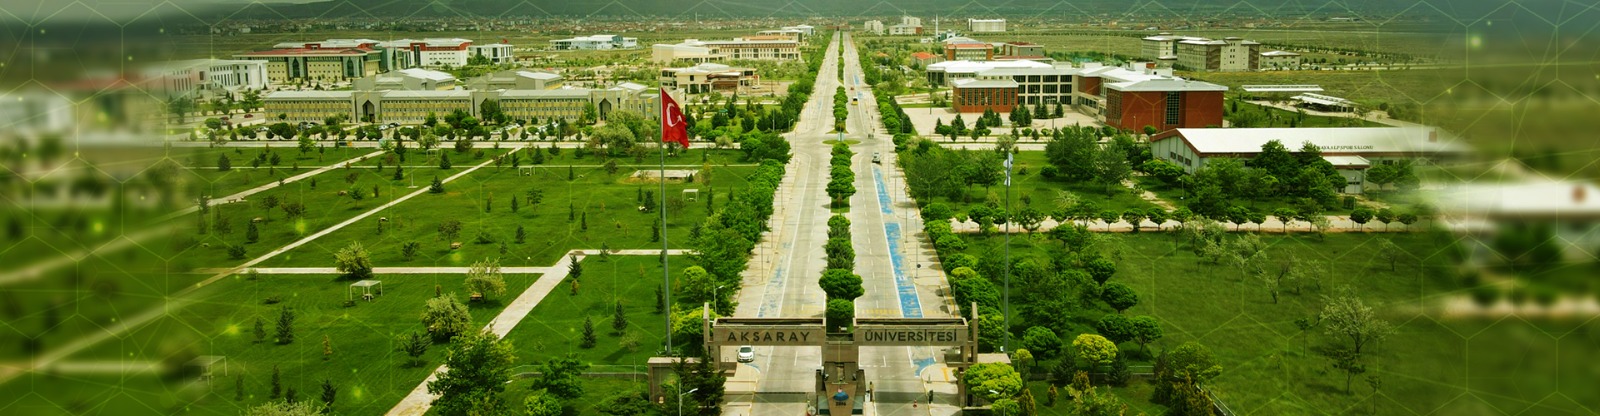 aksaray universitesi find and study 4 - Aksaray Üniversitesi